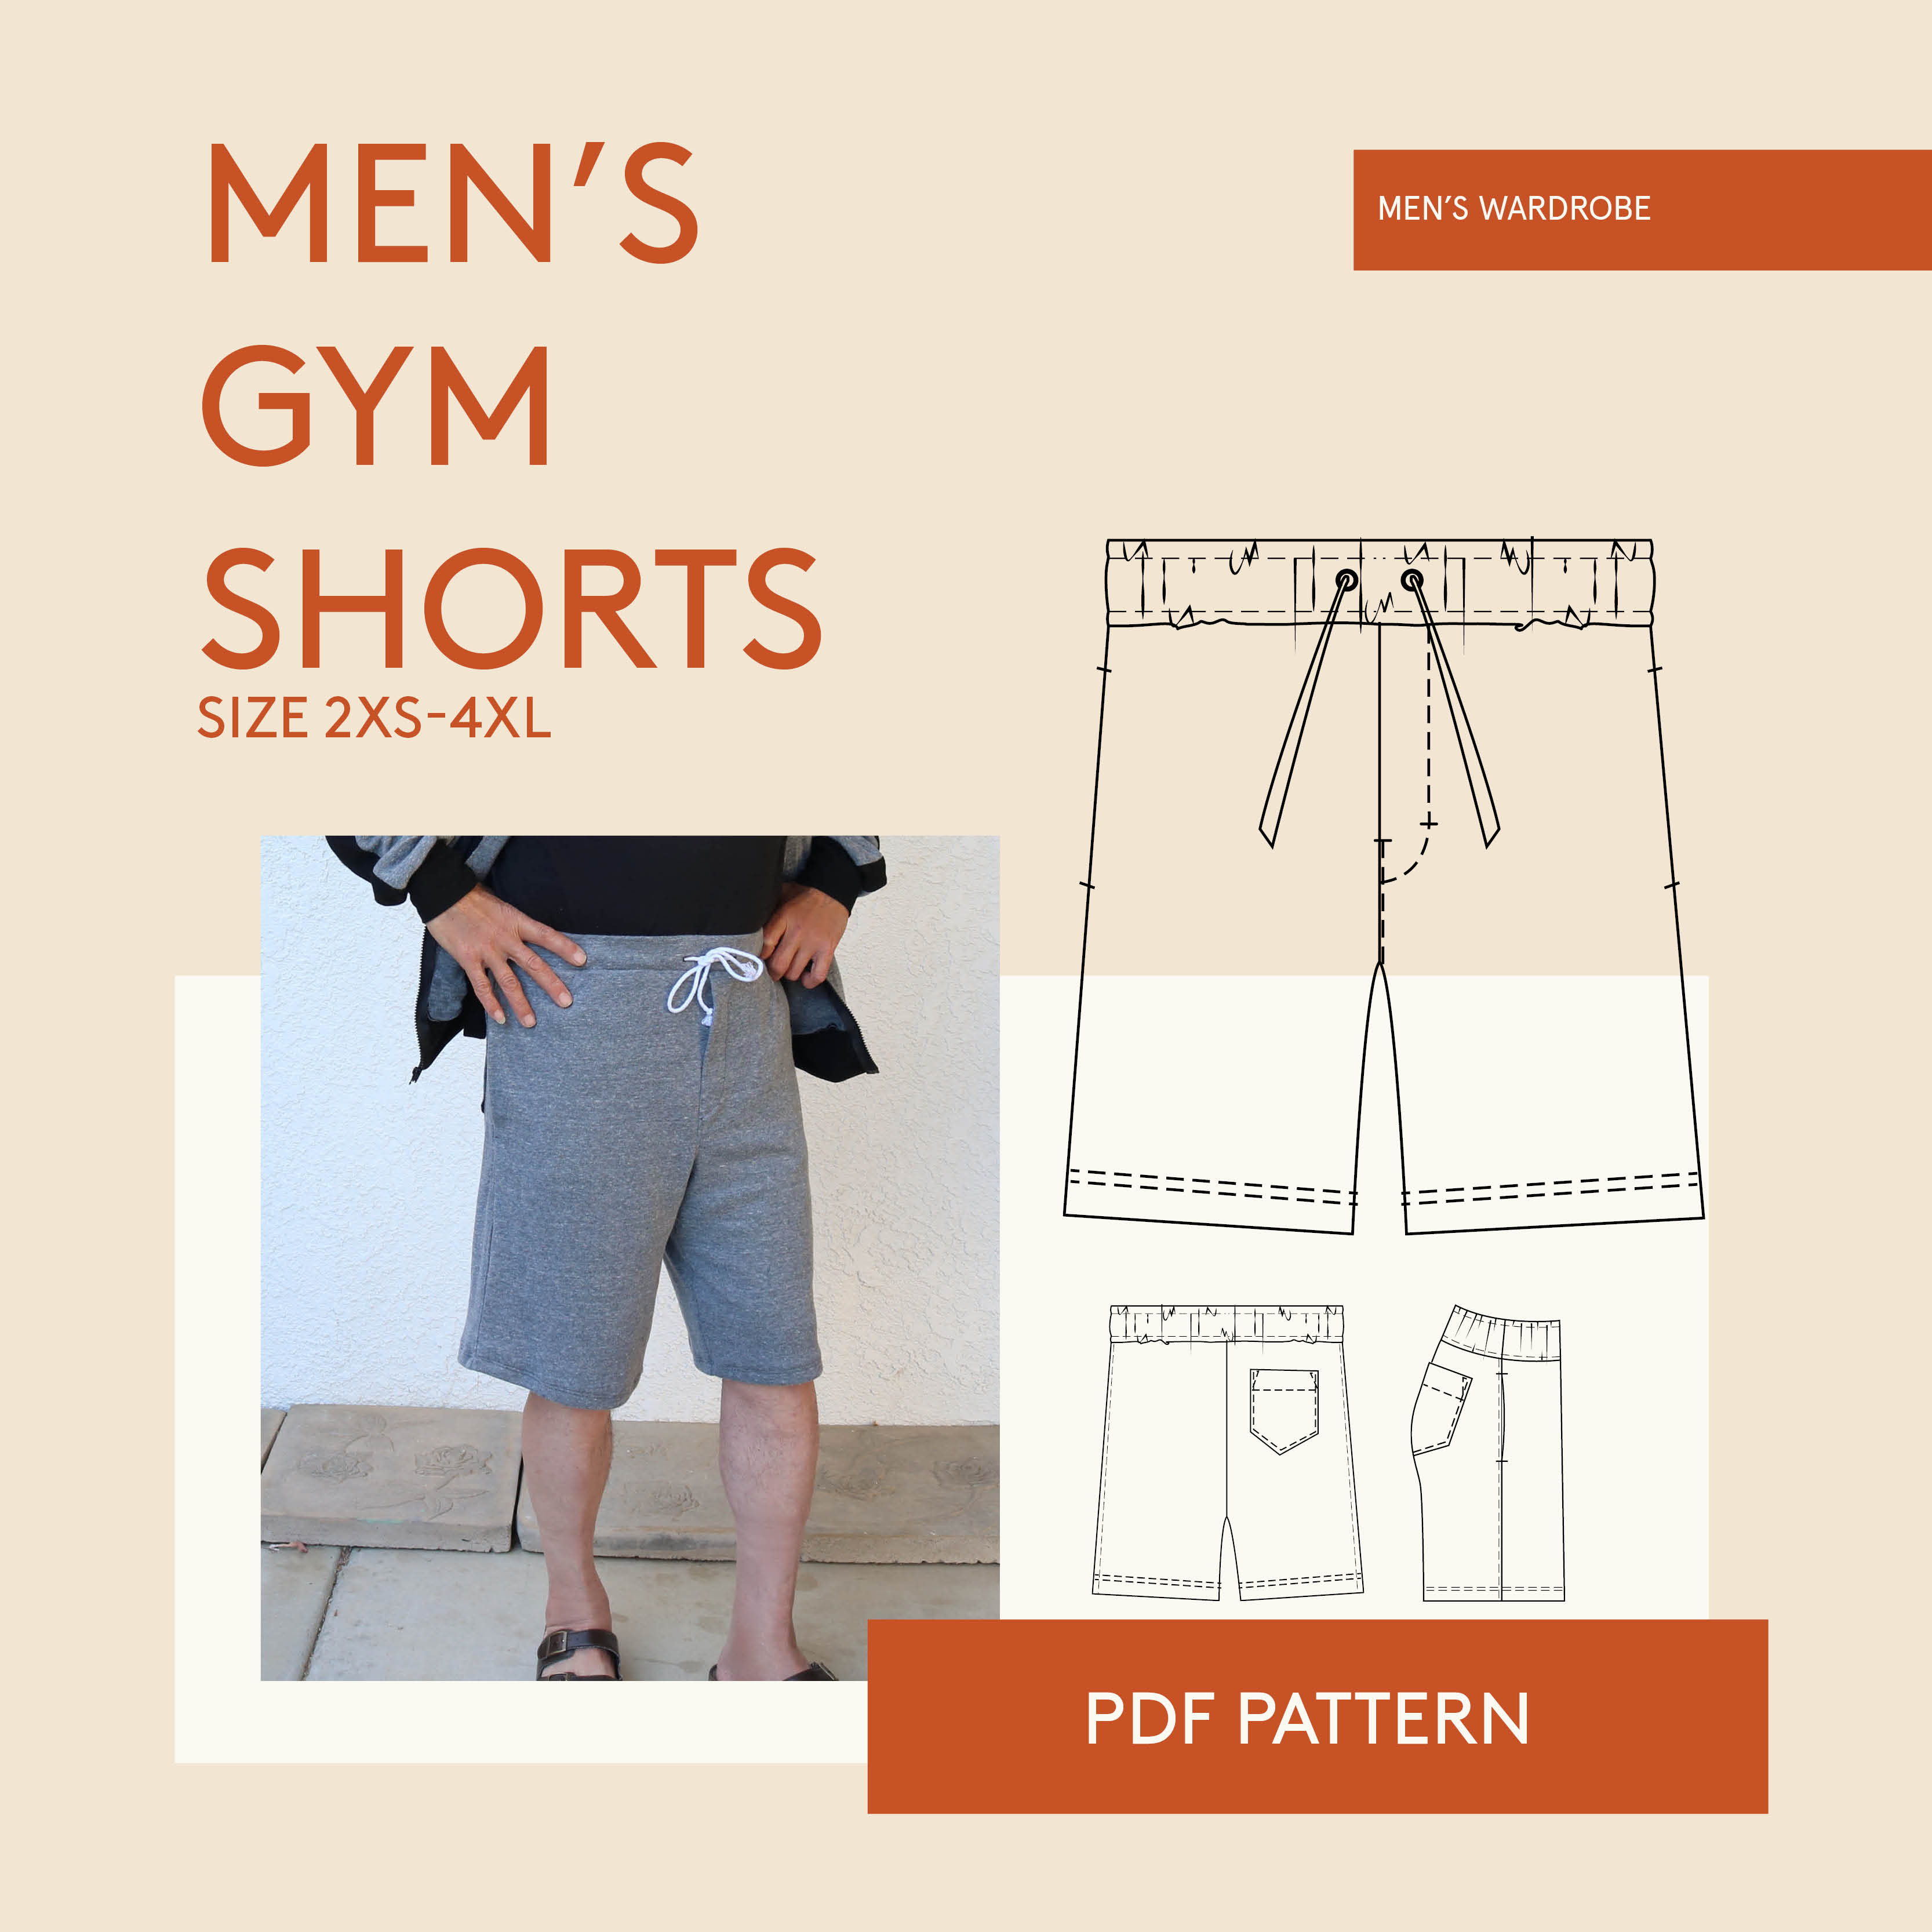 Wardrobe by Me Men's gym shorts